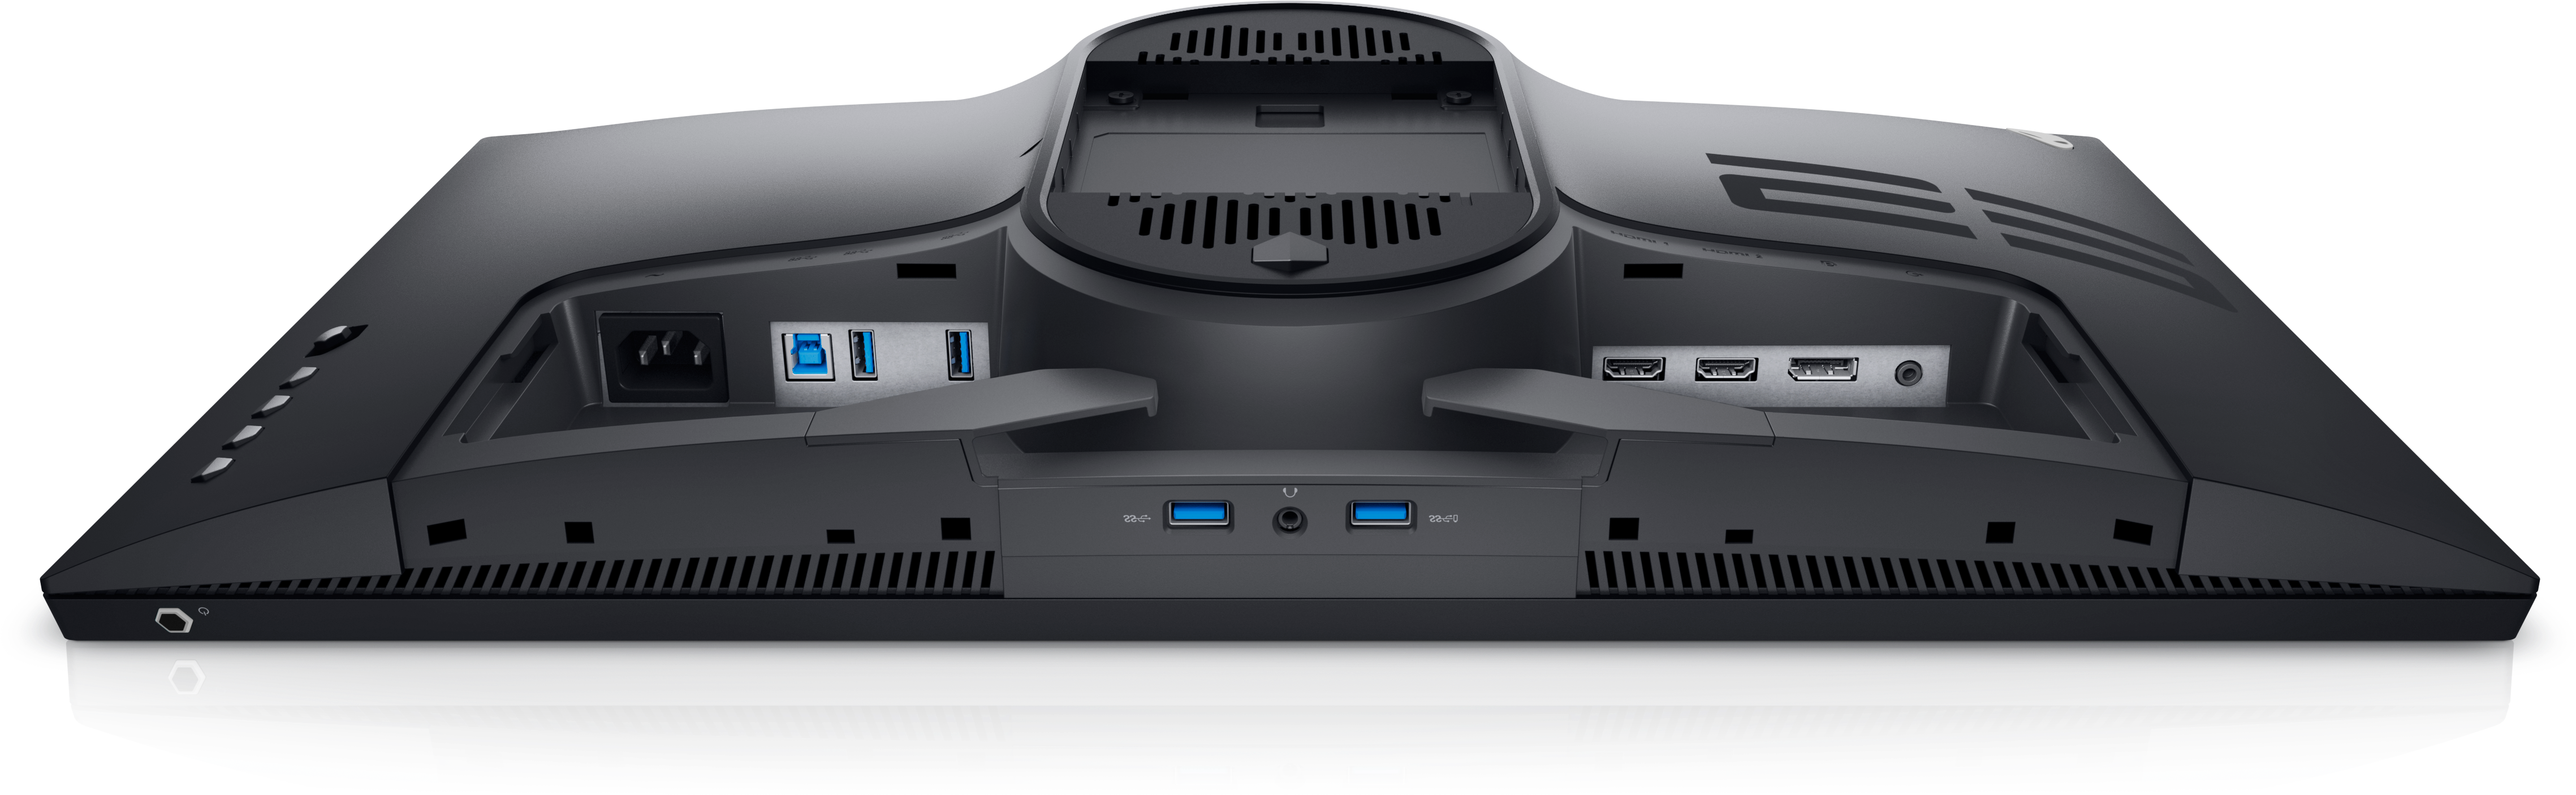 Alienware 25 Inch Gaming Monitor - AW2521HF : External Computer Monitors |  Dell USA